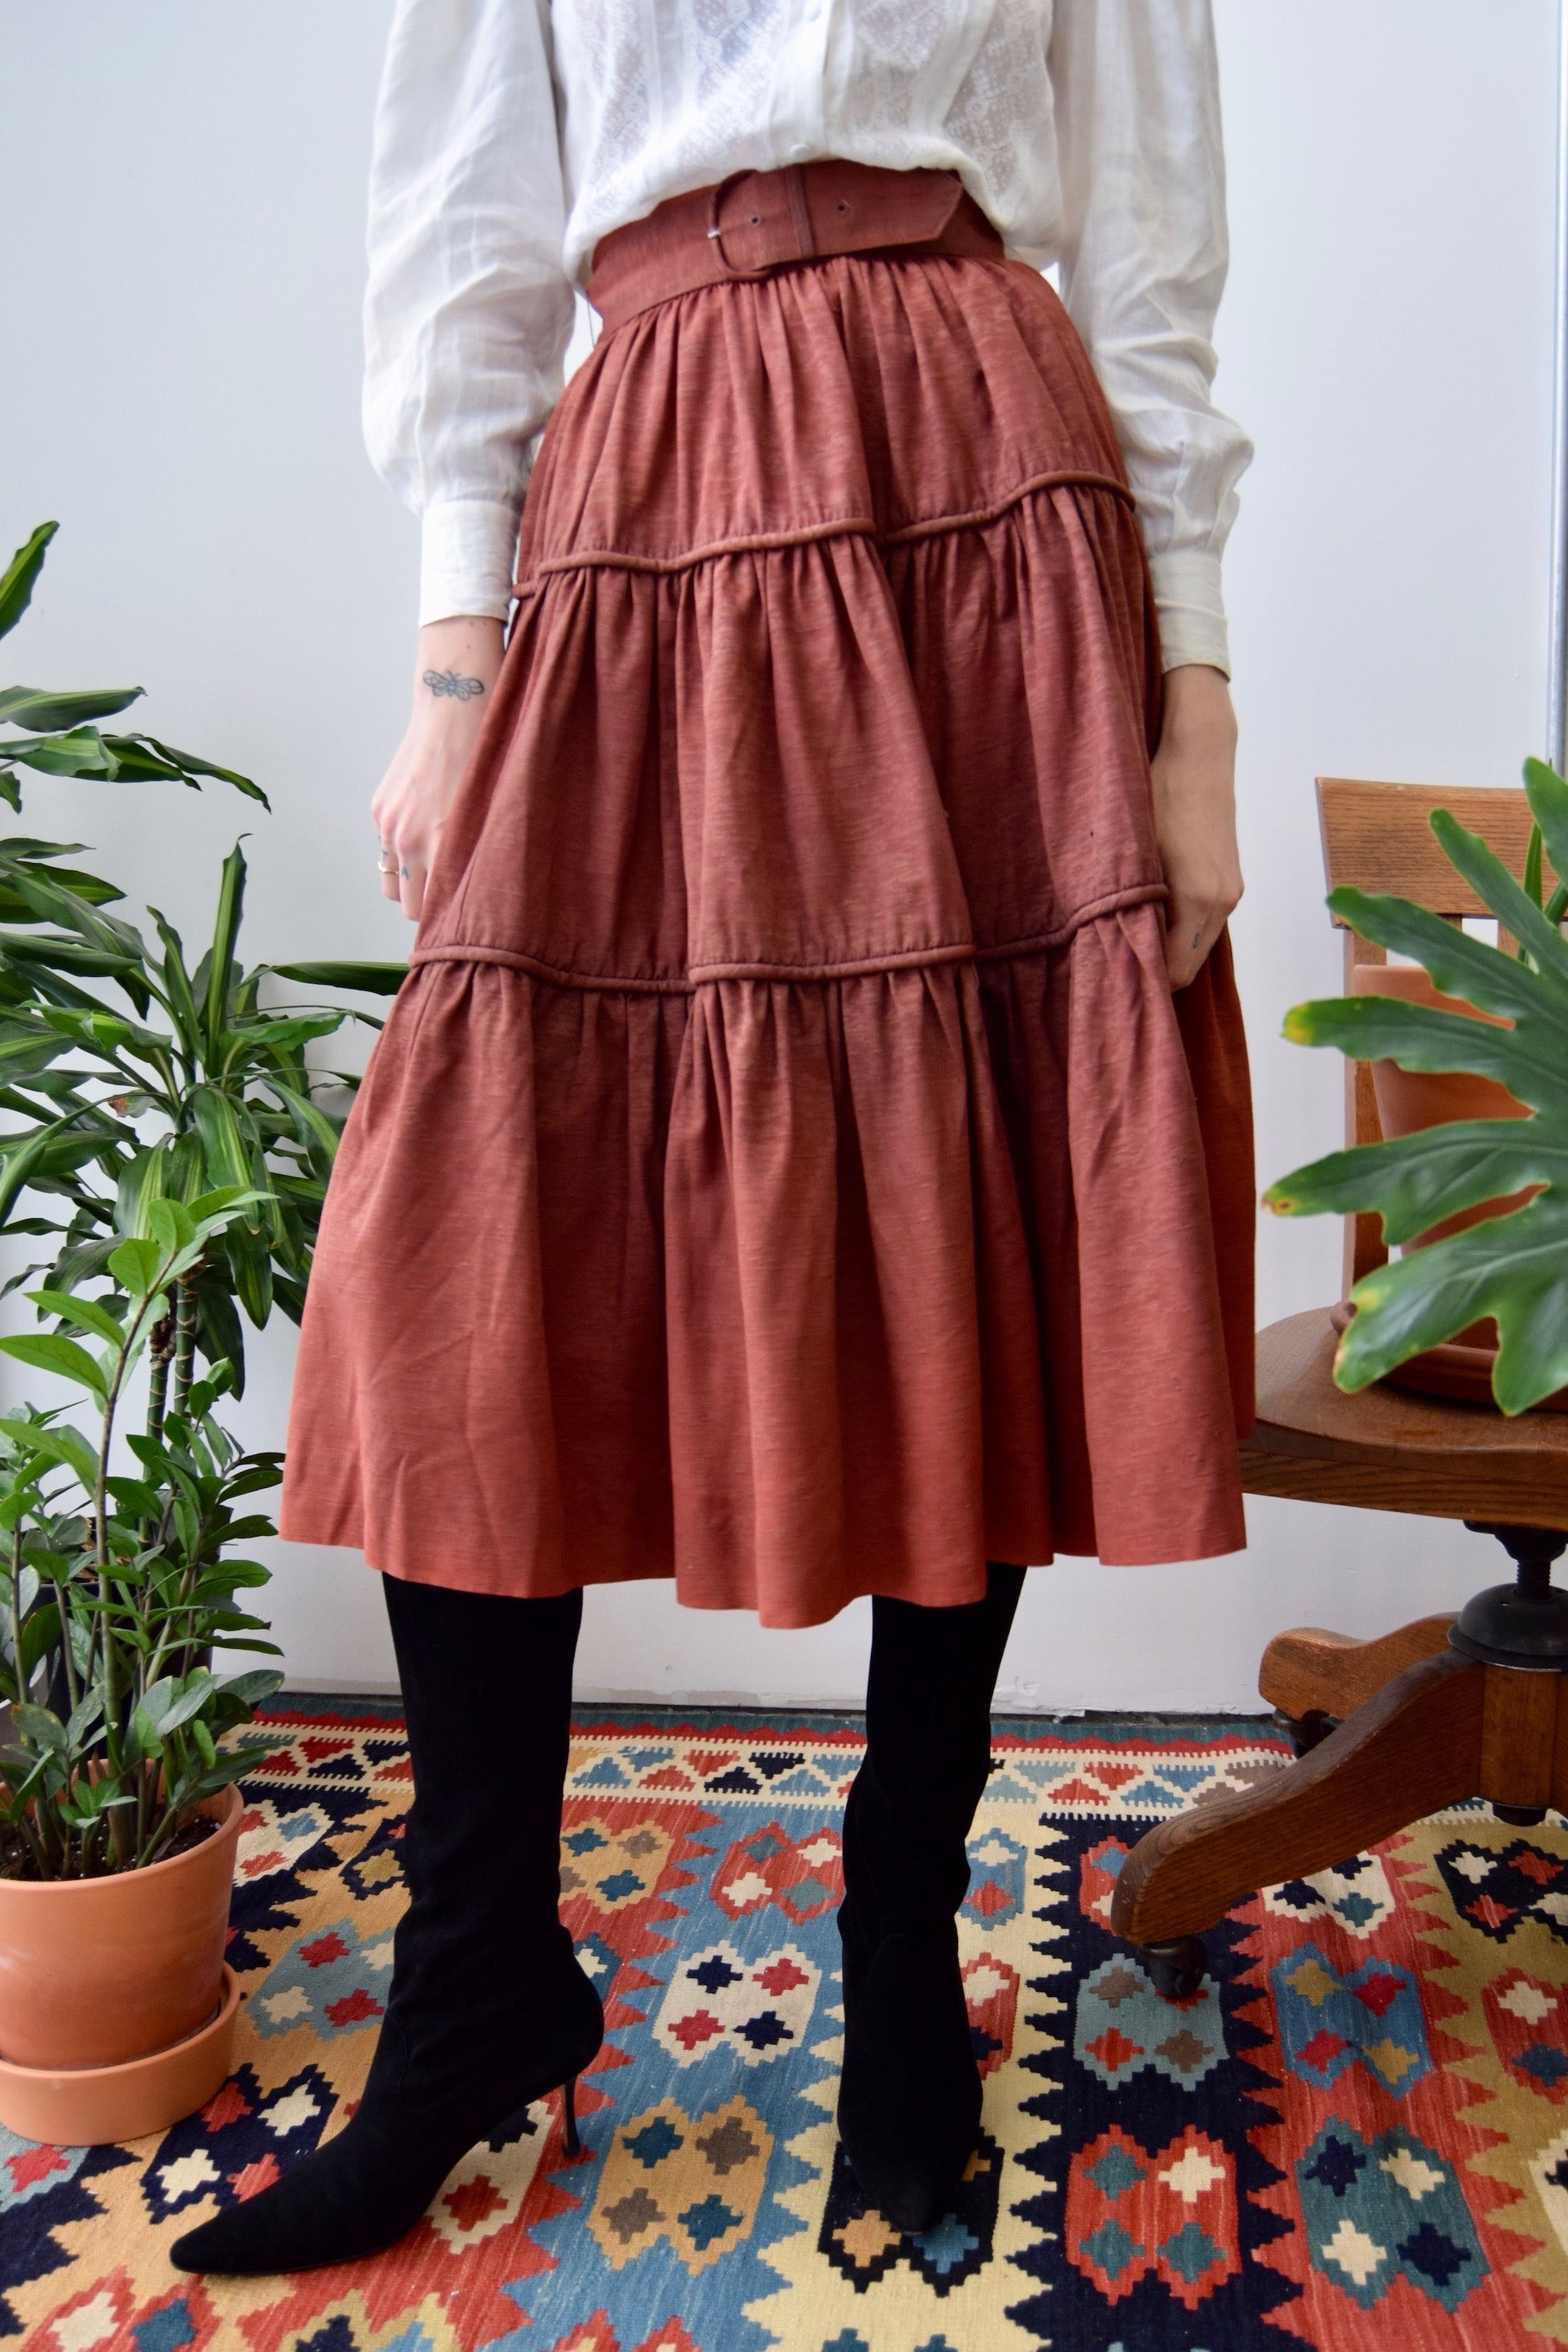 Stunning Vintage Moiré Skirt